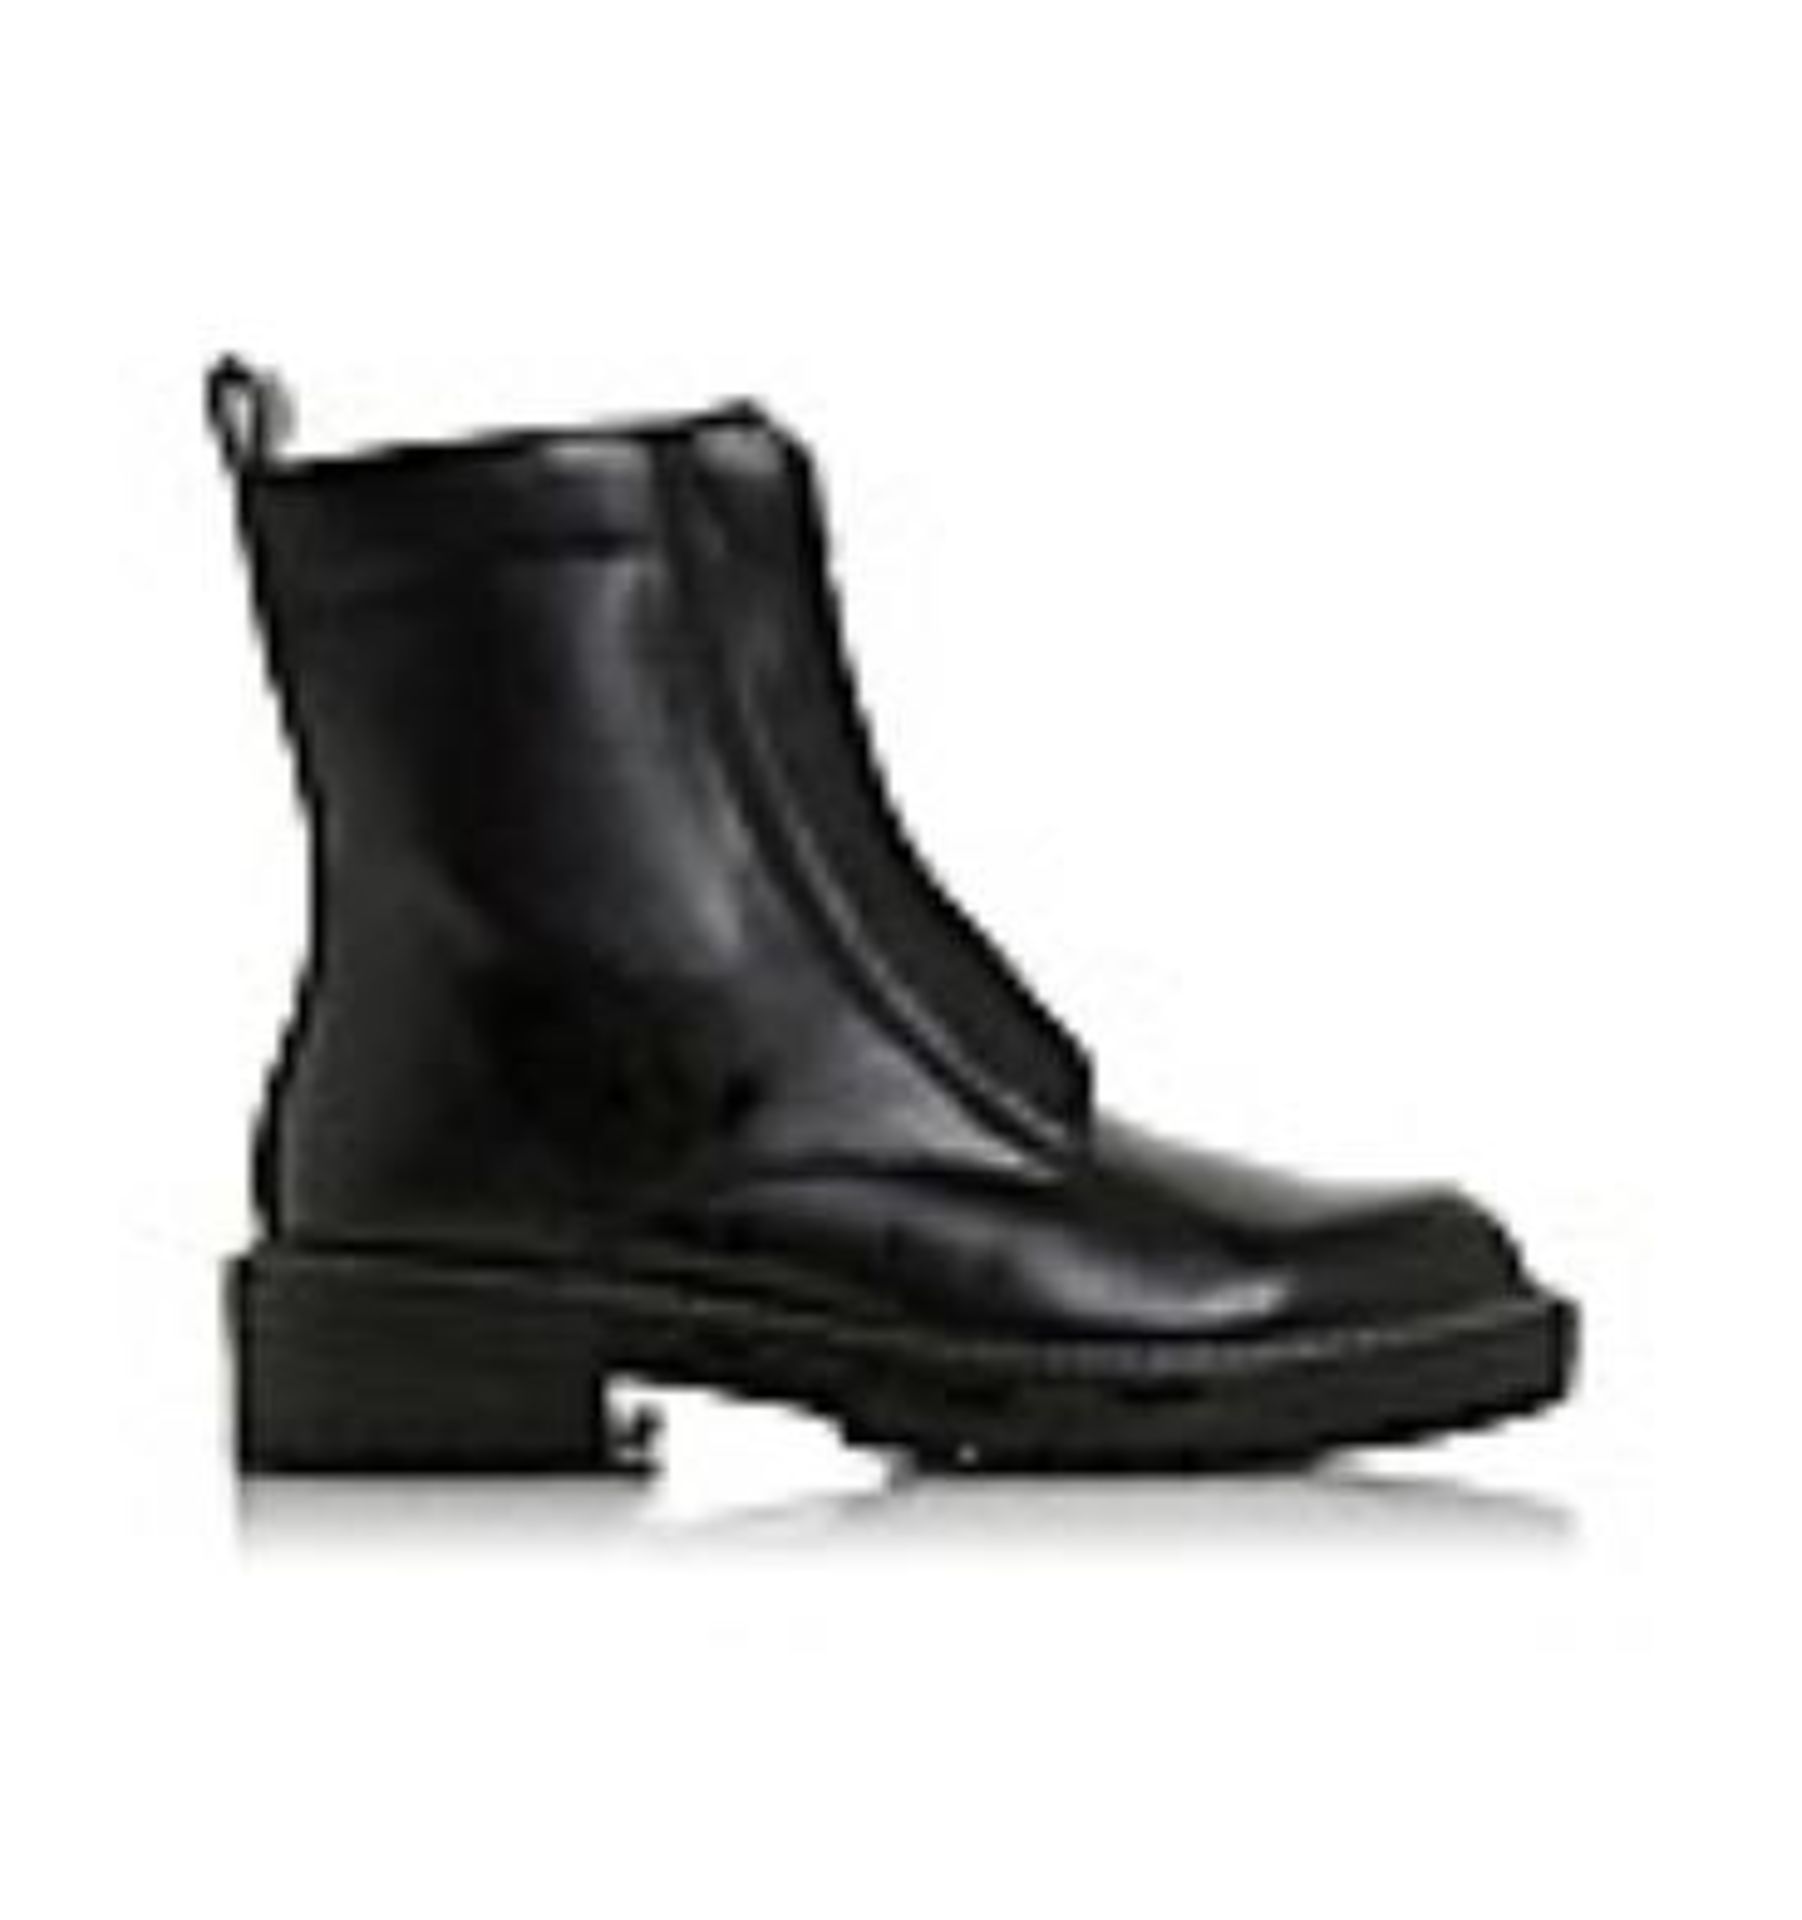 + VAT Brand New Pair Black HOH Pepa Boots Size 7